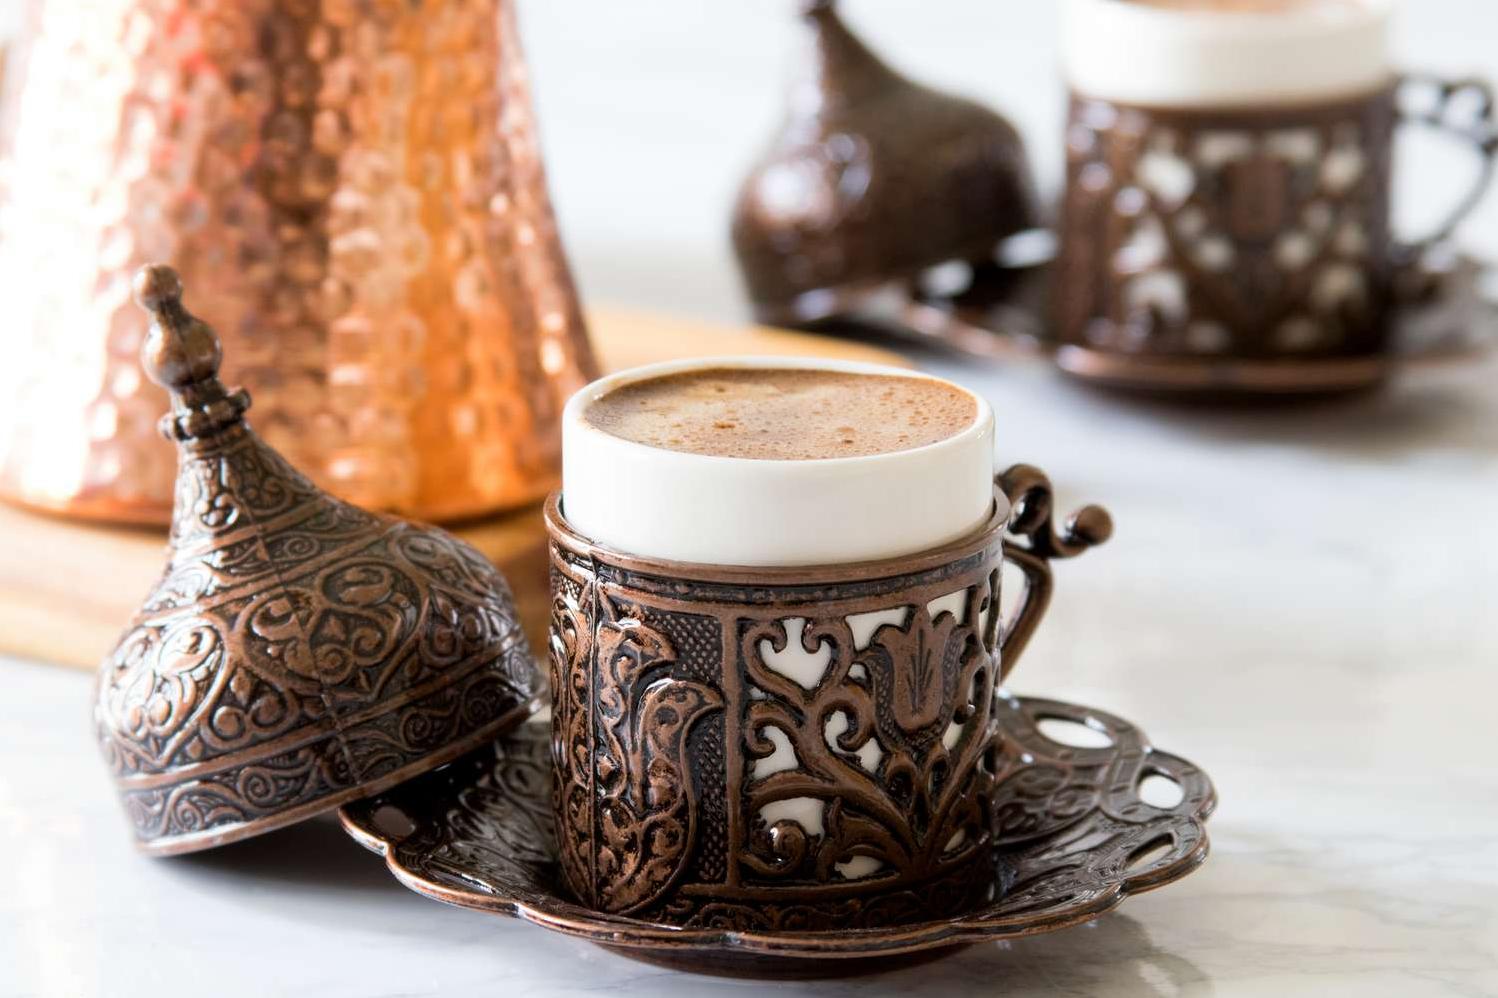  Savoring the rich aroma of Turkish coffee